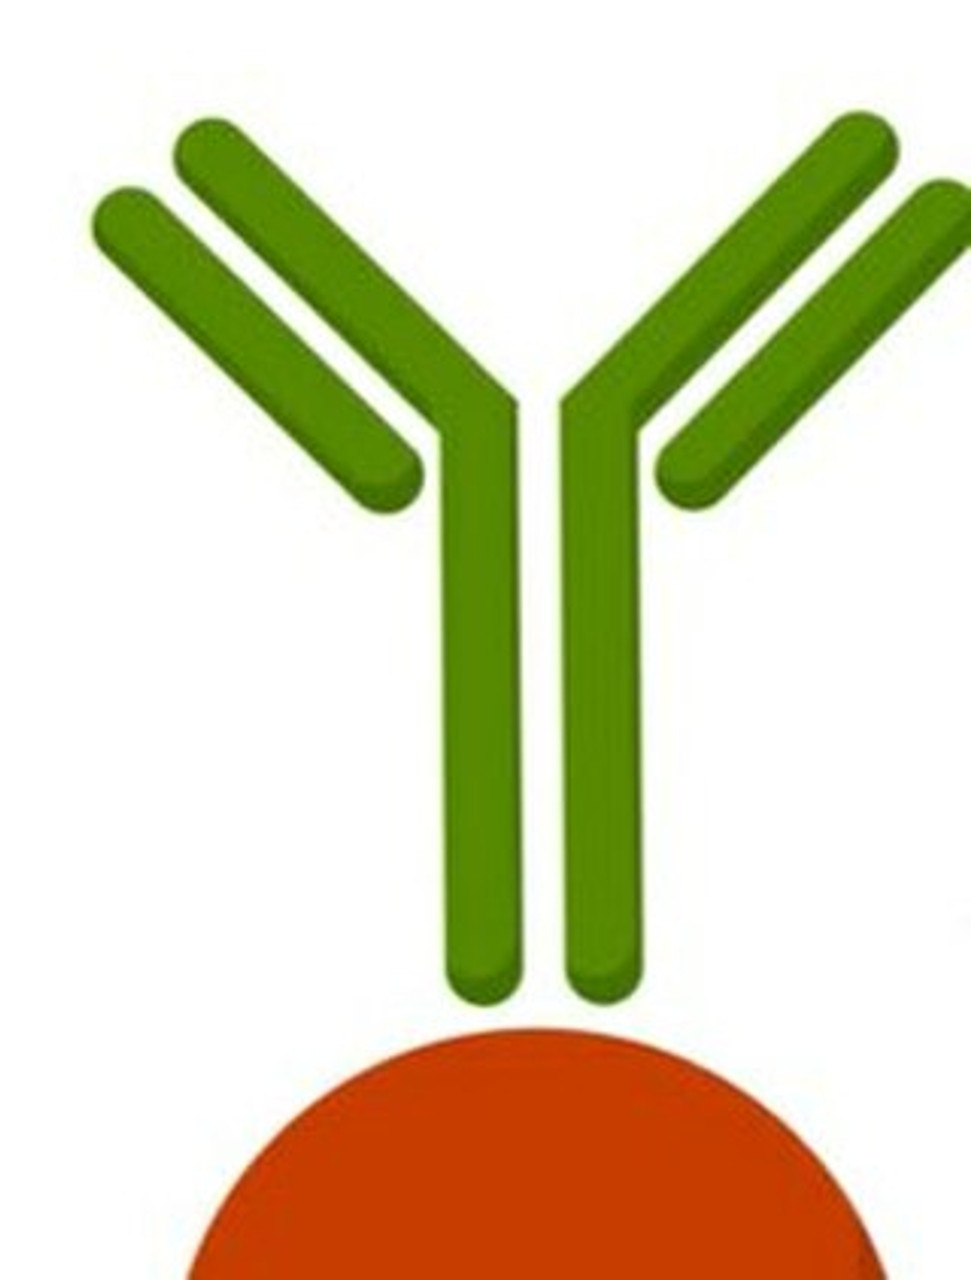 SLAM/CD150  (Phospho- Tyr281)  Antibody